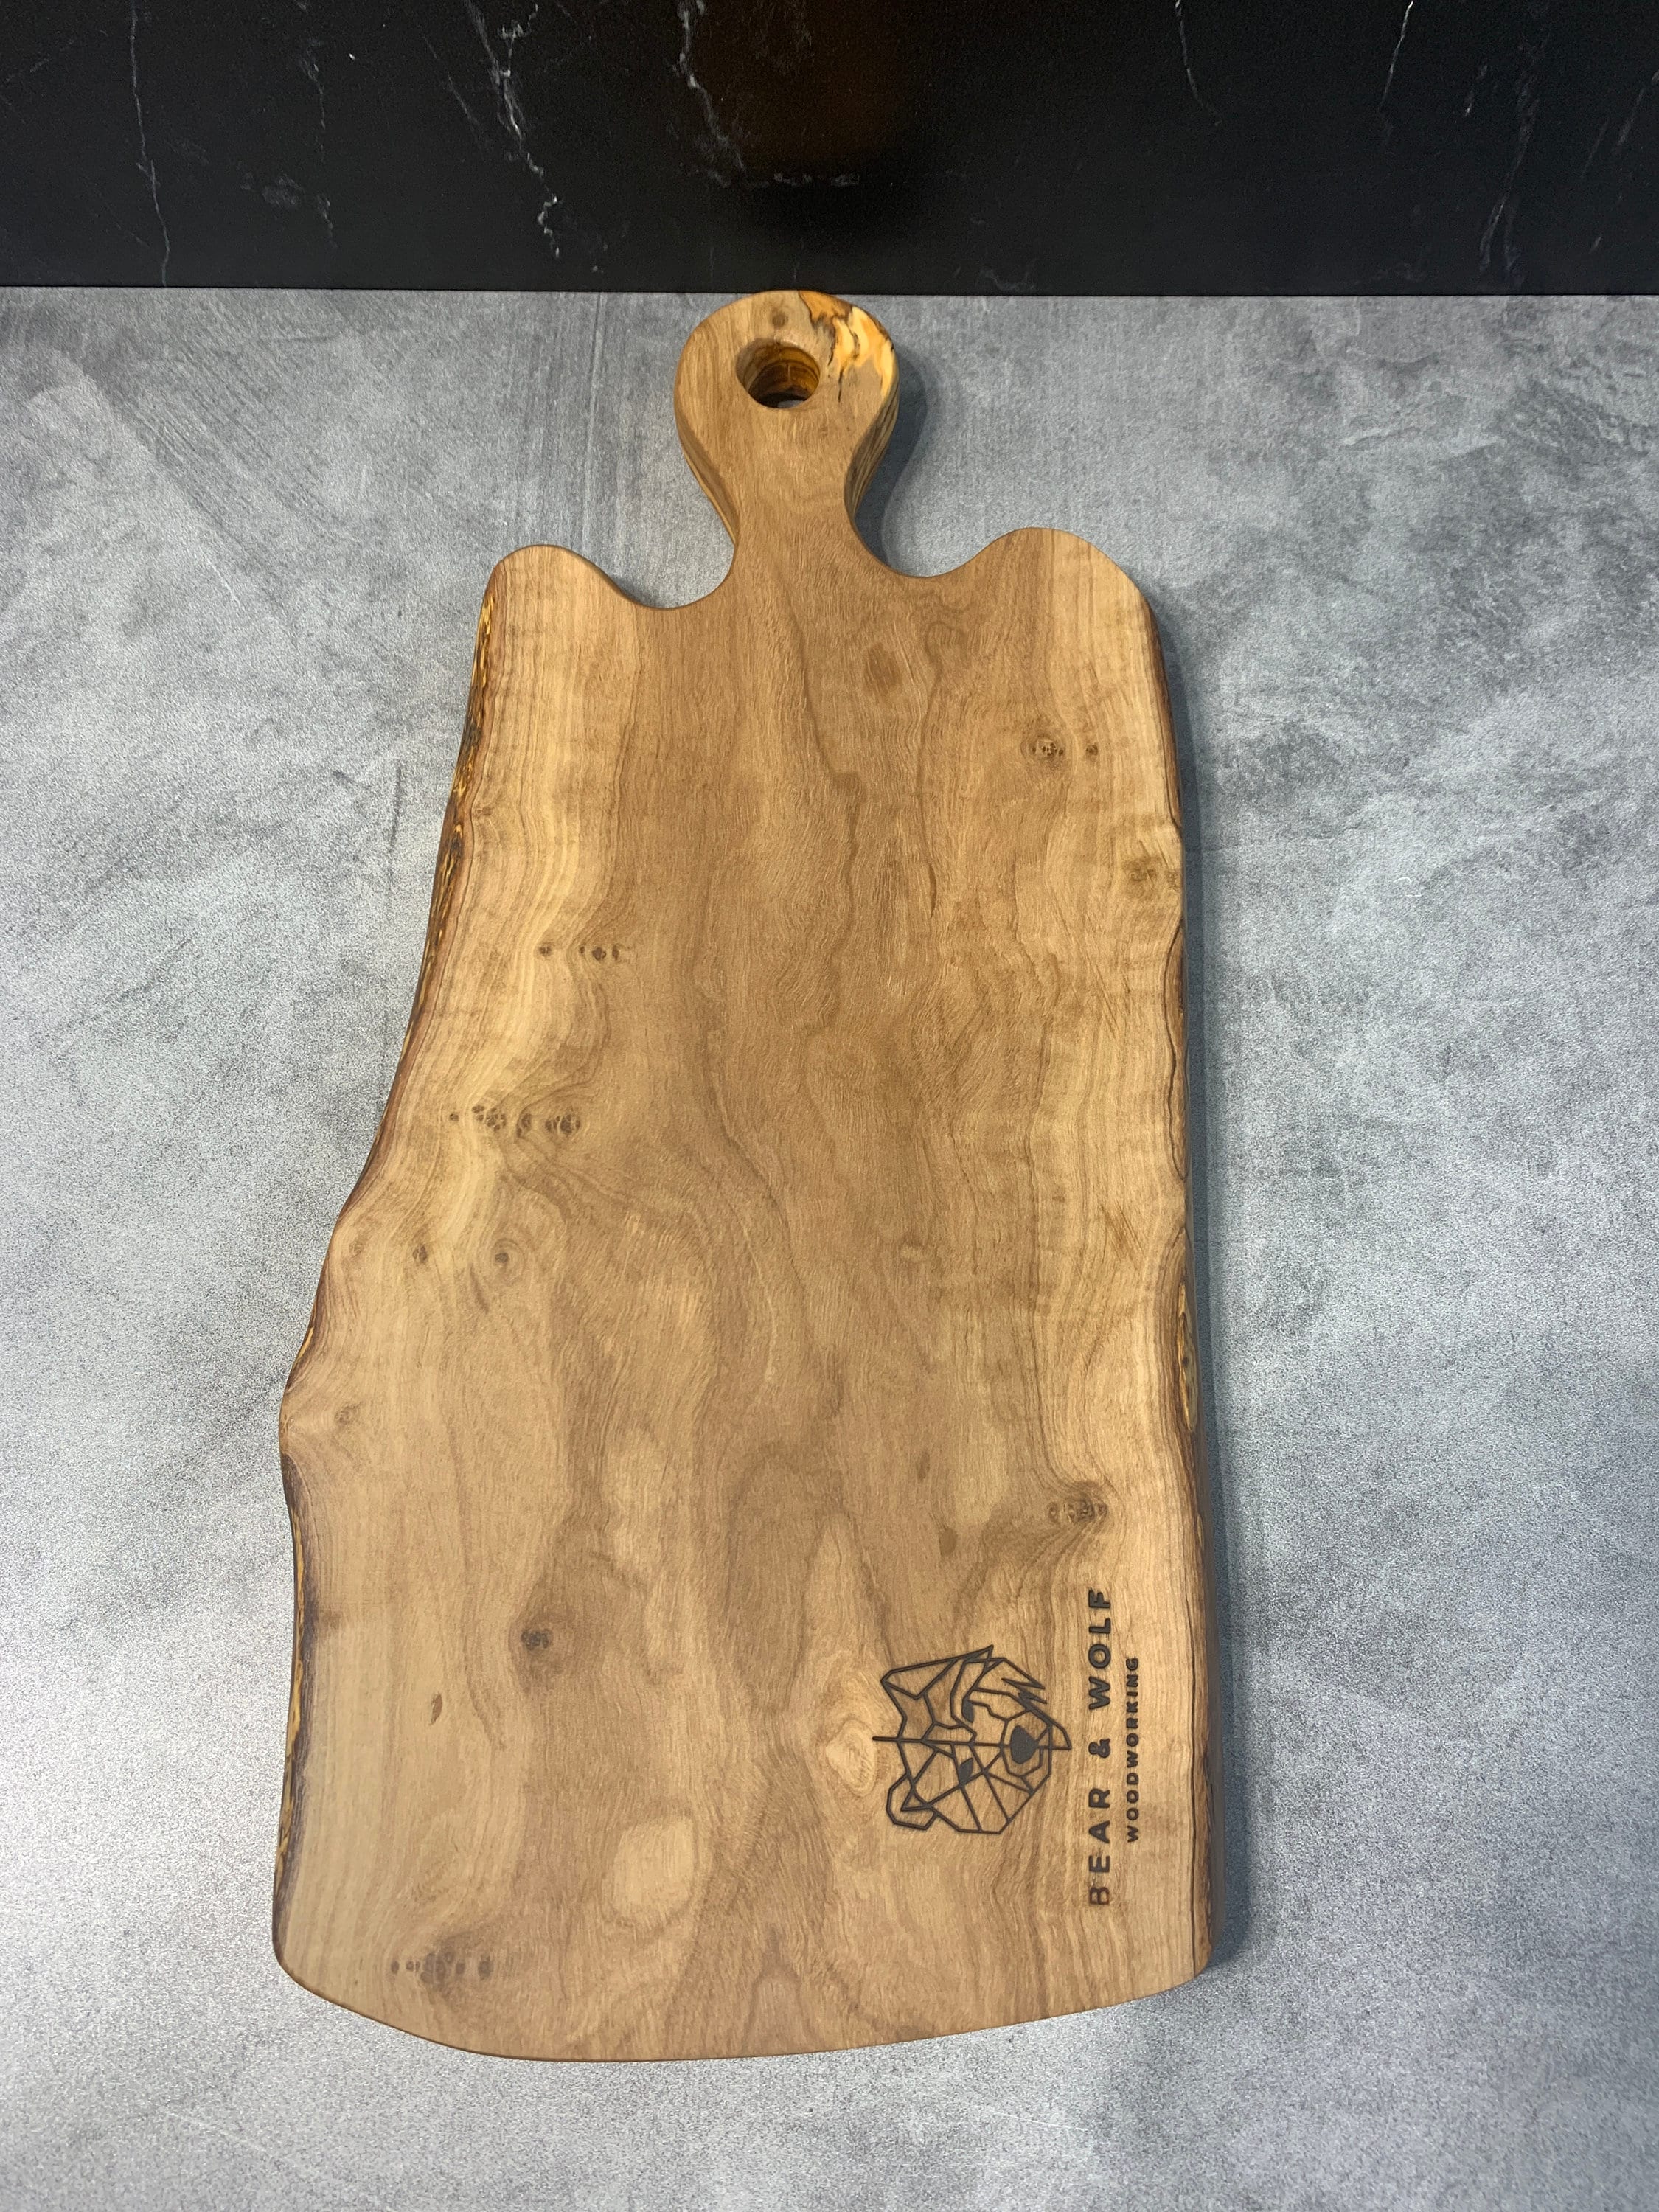 Olive Wood Cutting Board / Serving Board - Coronado Taste of Oils